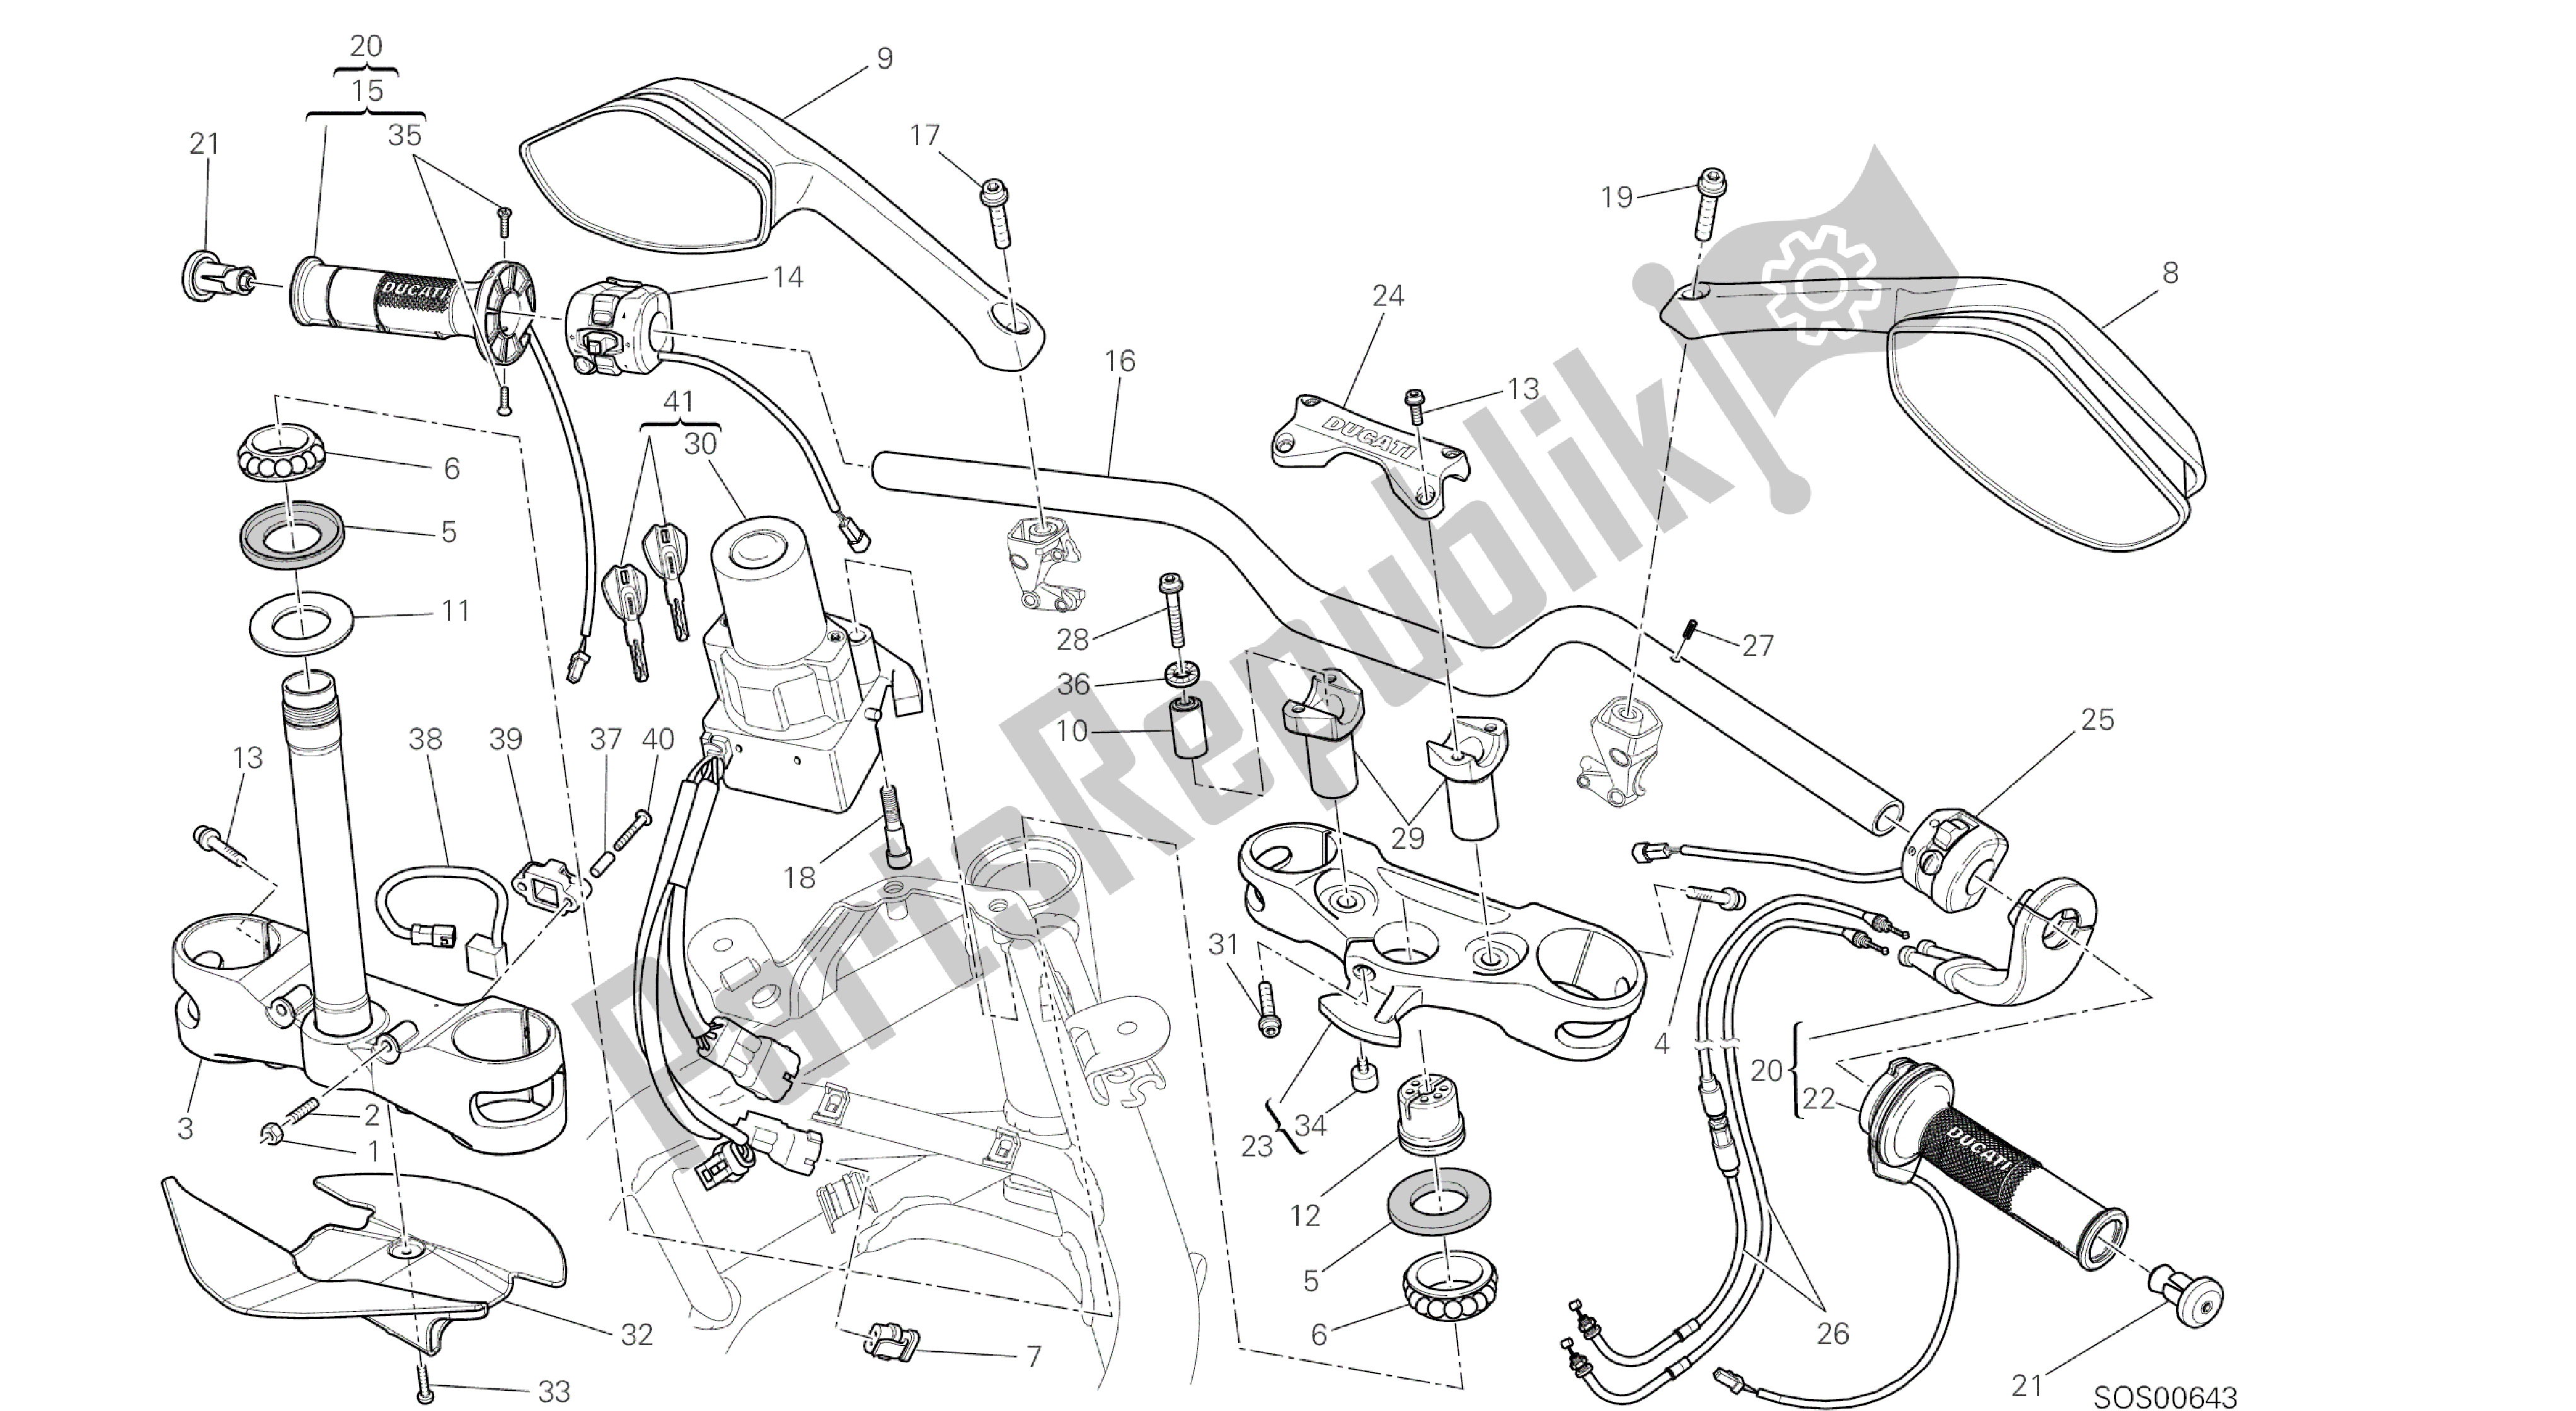 Alle onderdelen voor de Tekening 021 - Stuur [mod: Ms1200st; Xst: Aus, Chn, Eur, Fra, Jap, Tha] Groepsframe van de Ducati Multistrada S Touring 1200 2014